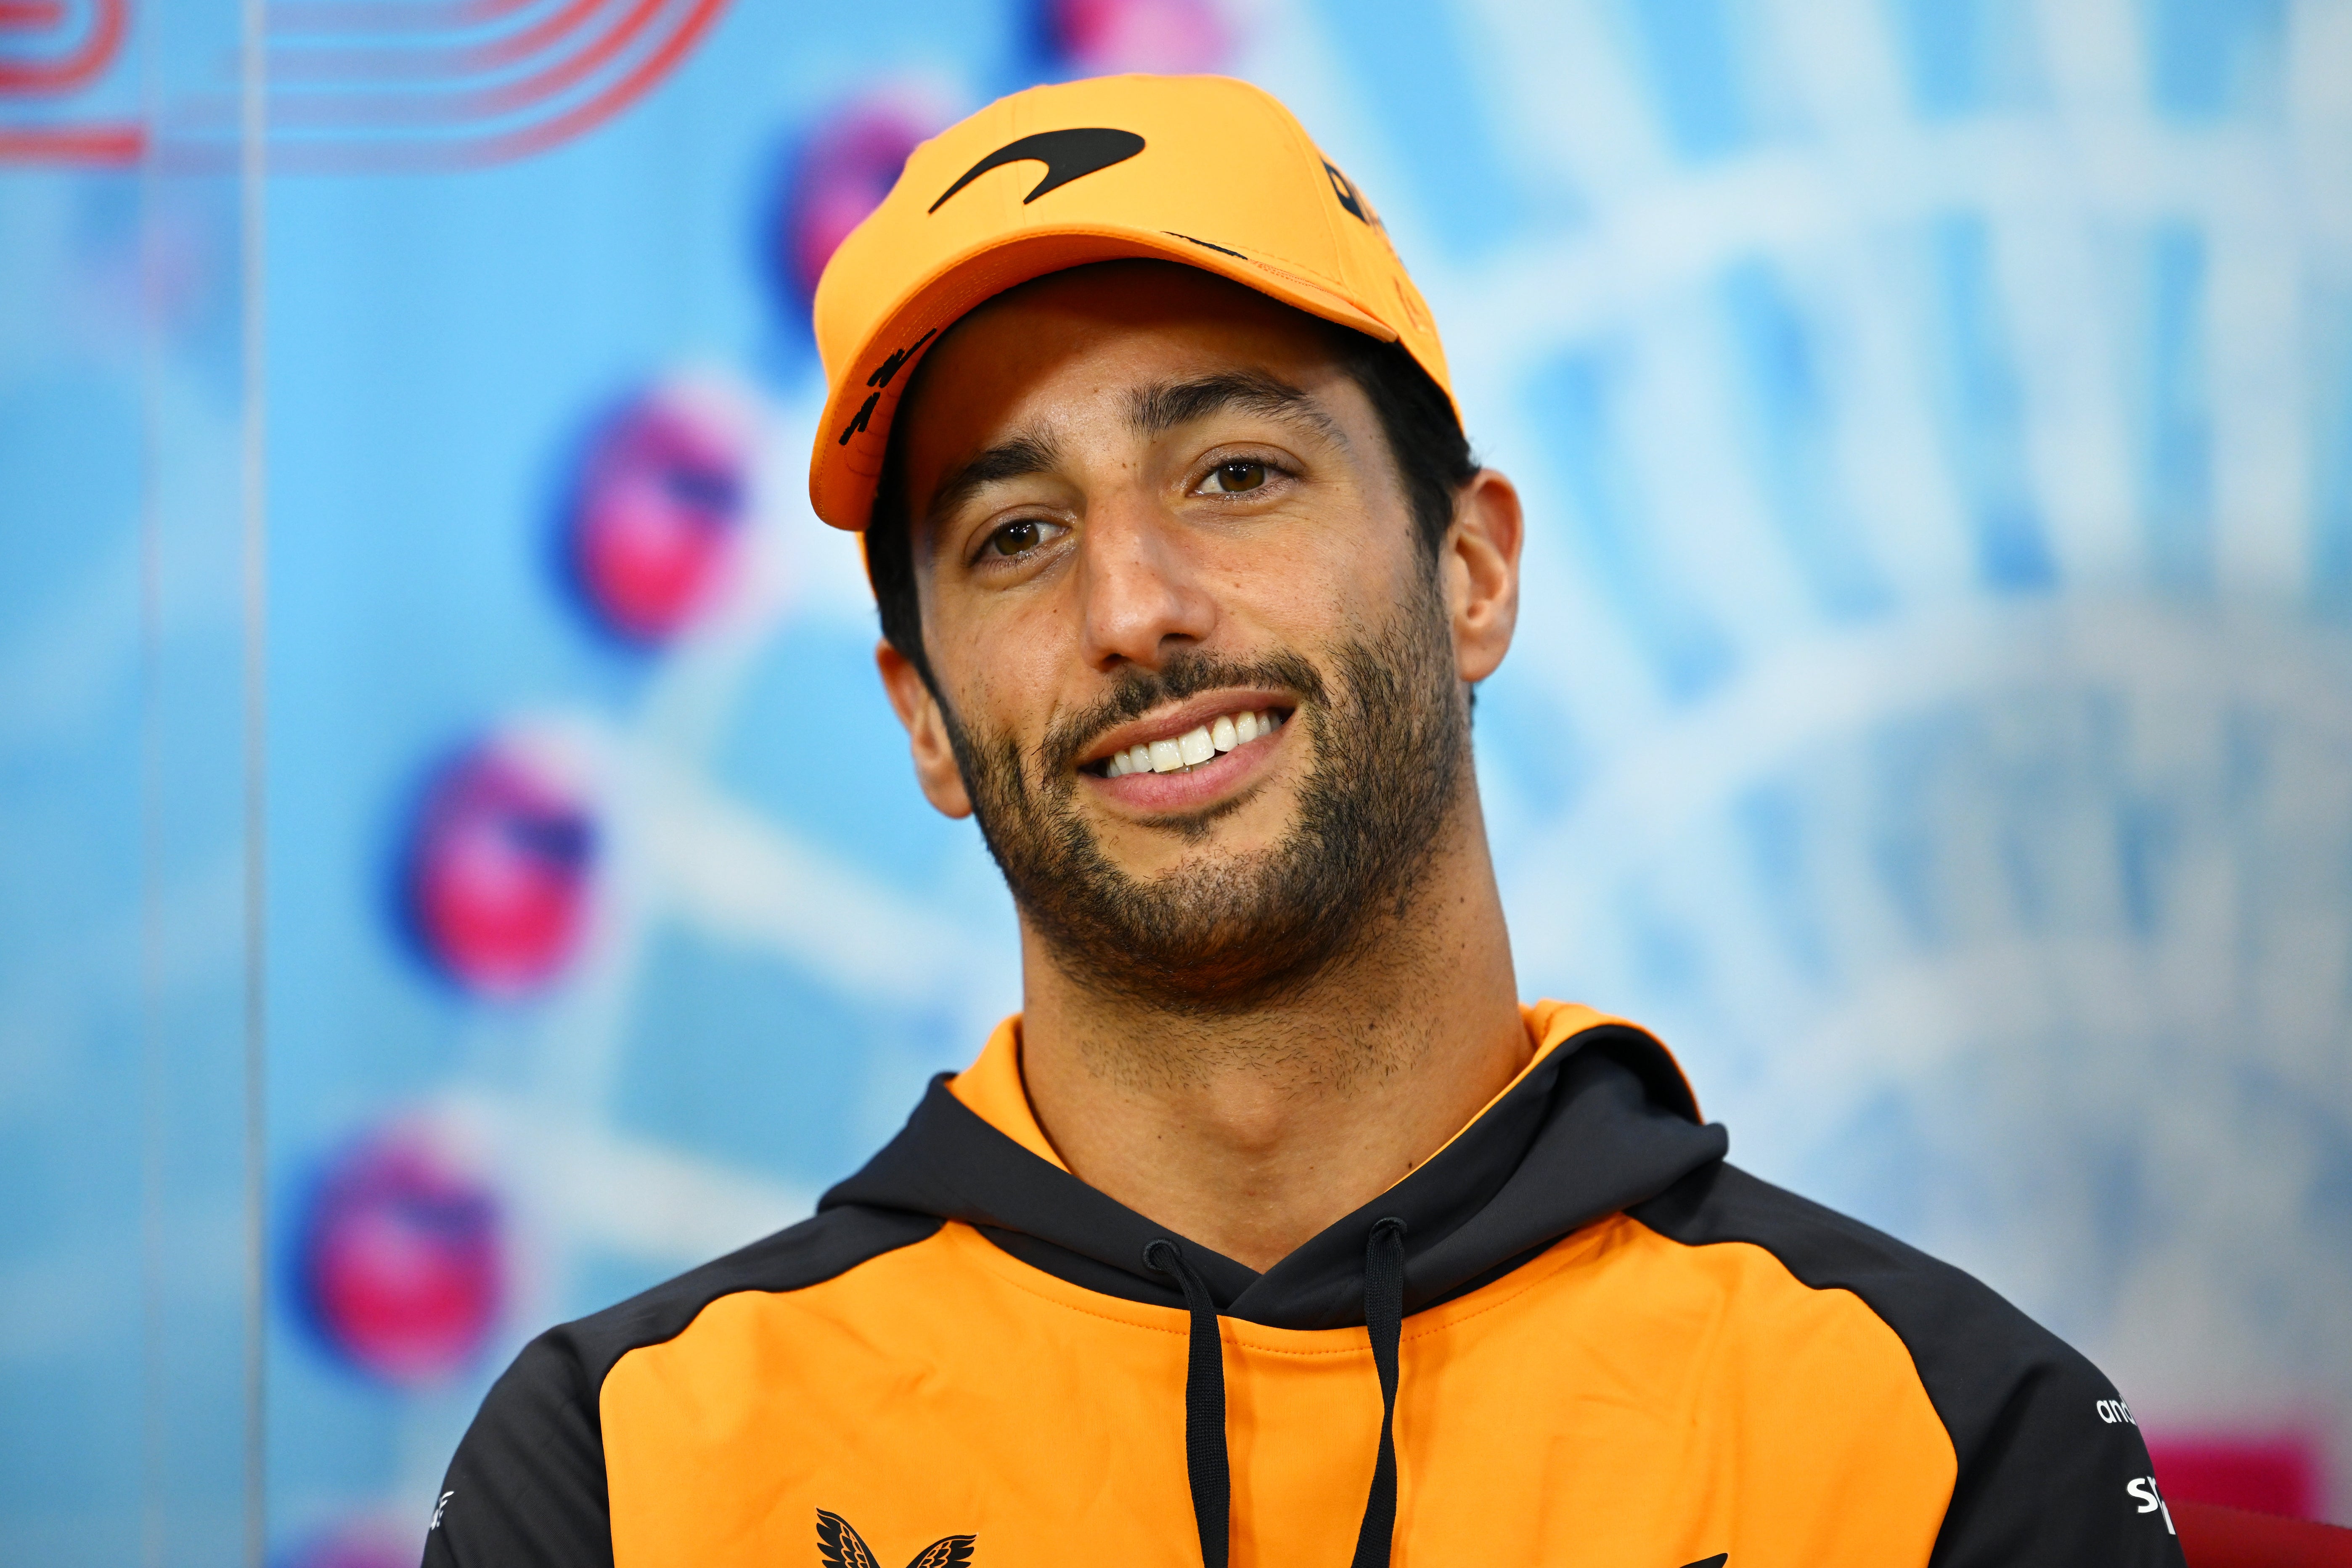 Daniel Ricciardo won’t be on the grid next season